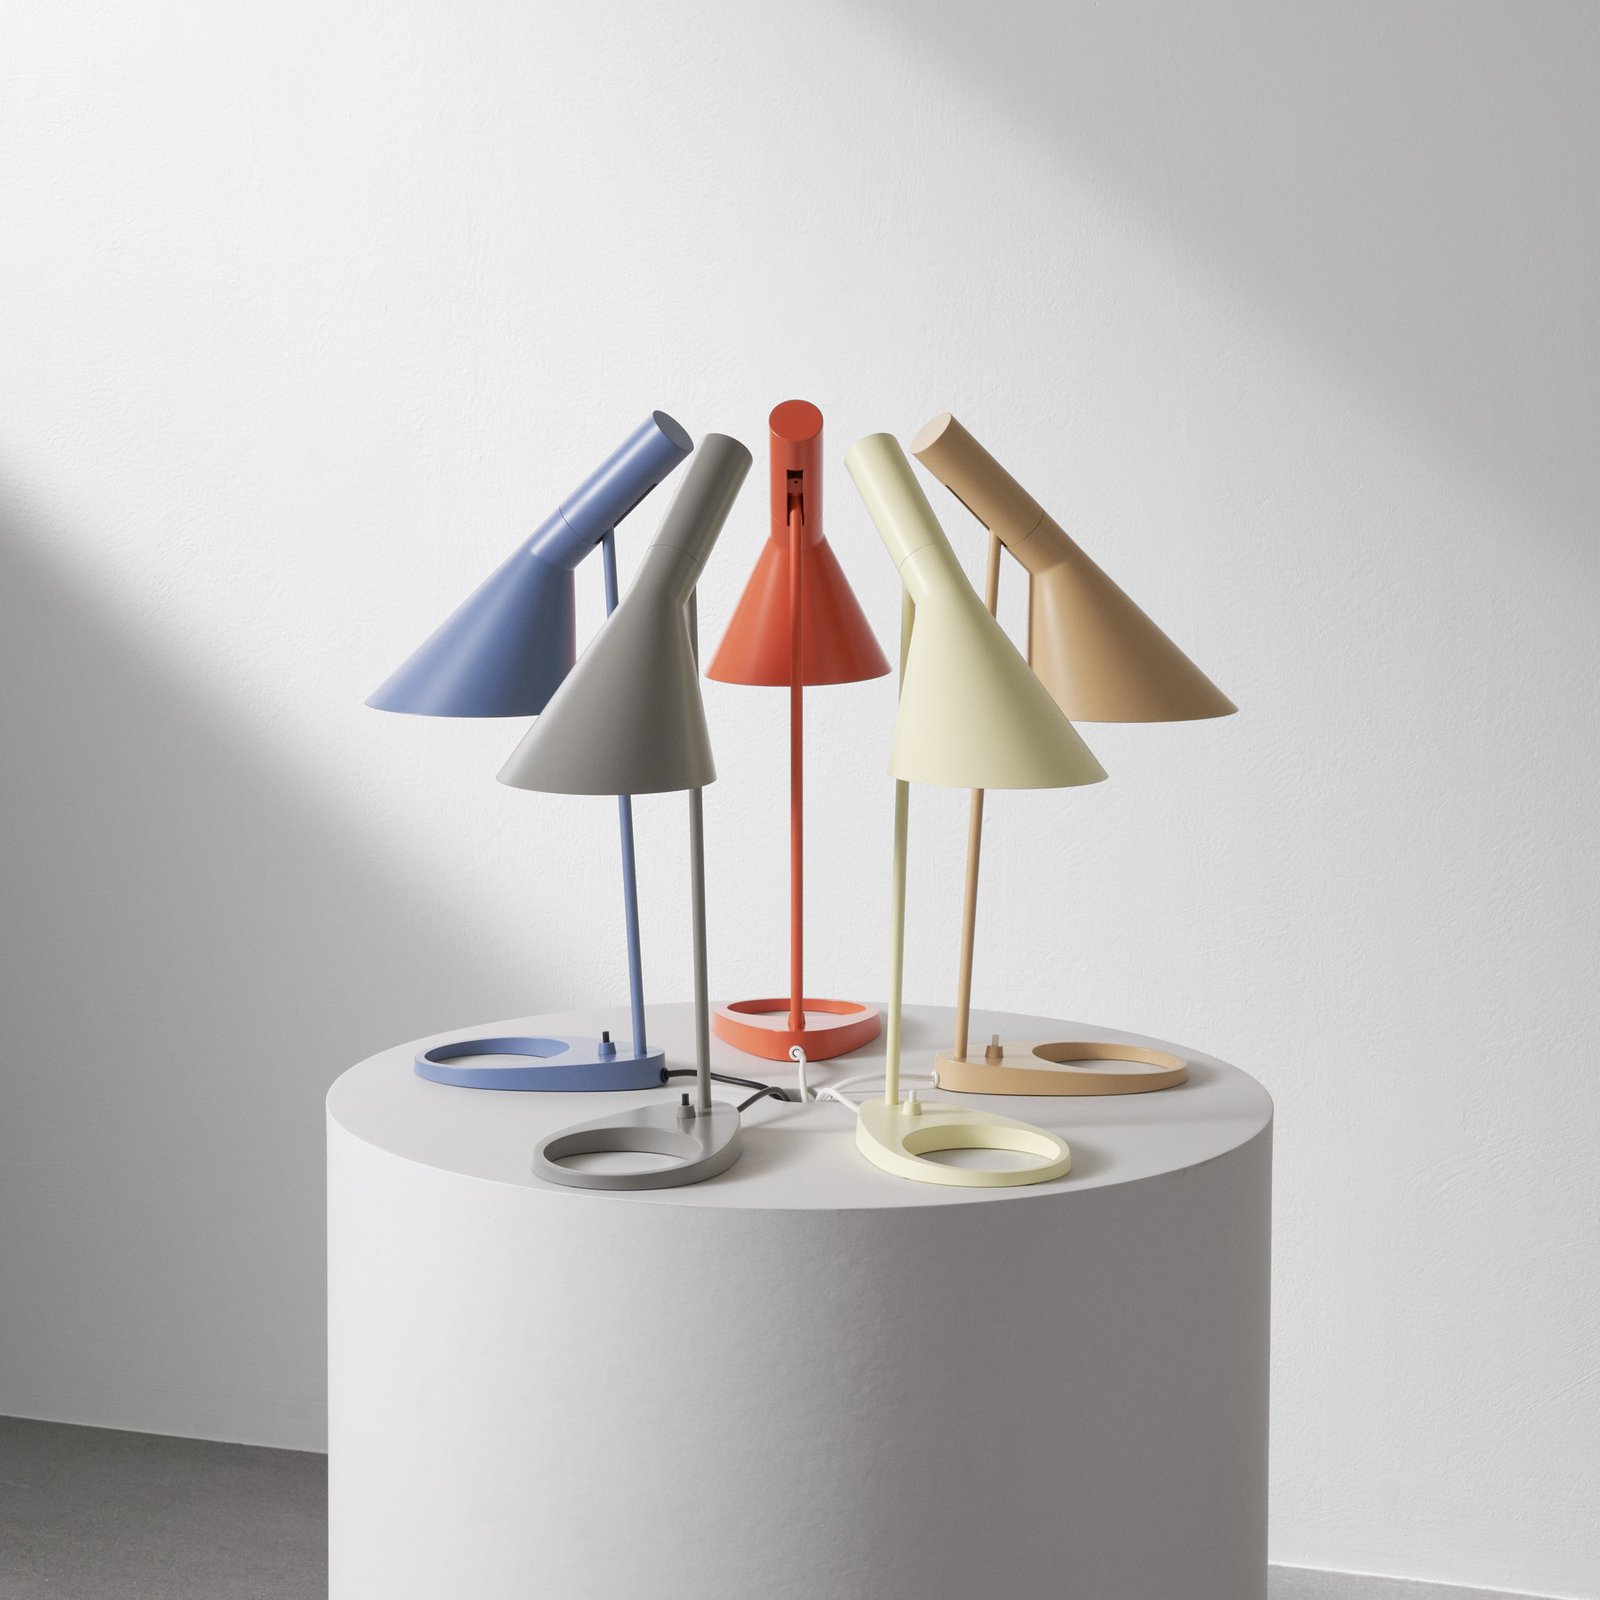 Louis Poulsen AJ designer table lamp blue-grey